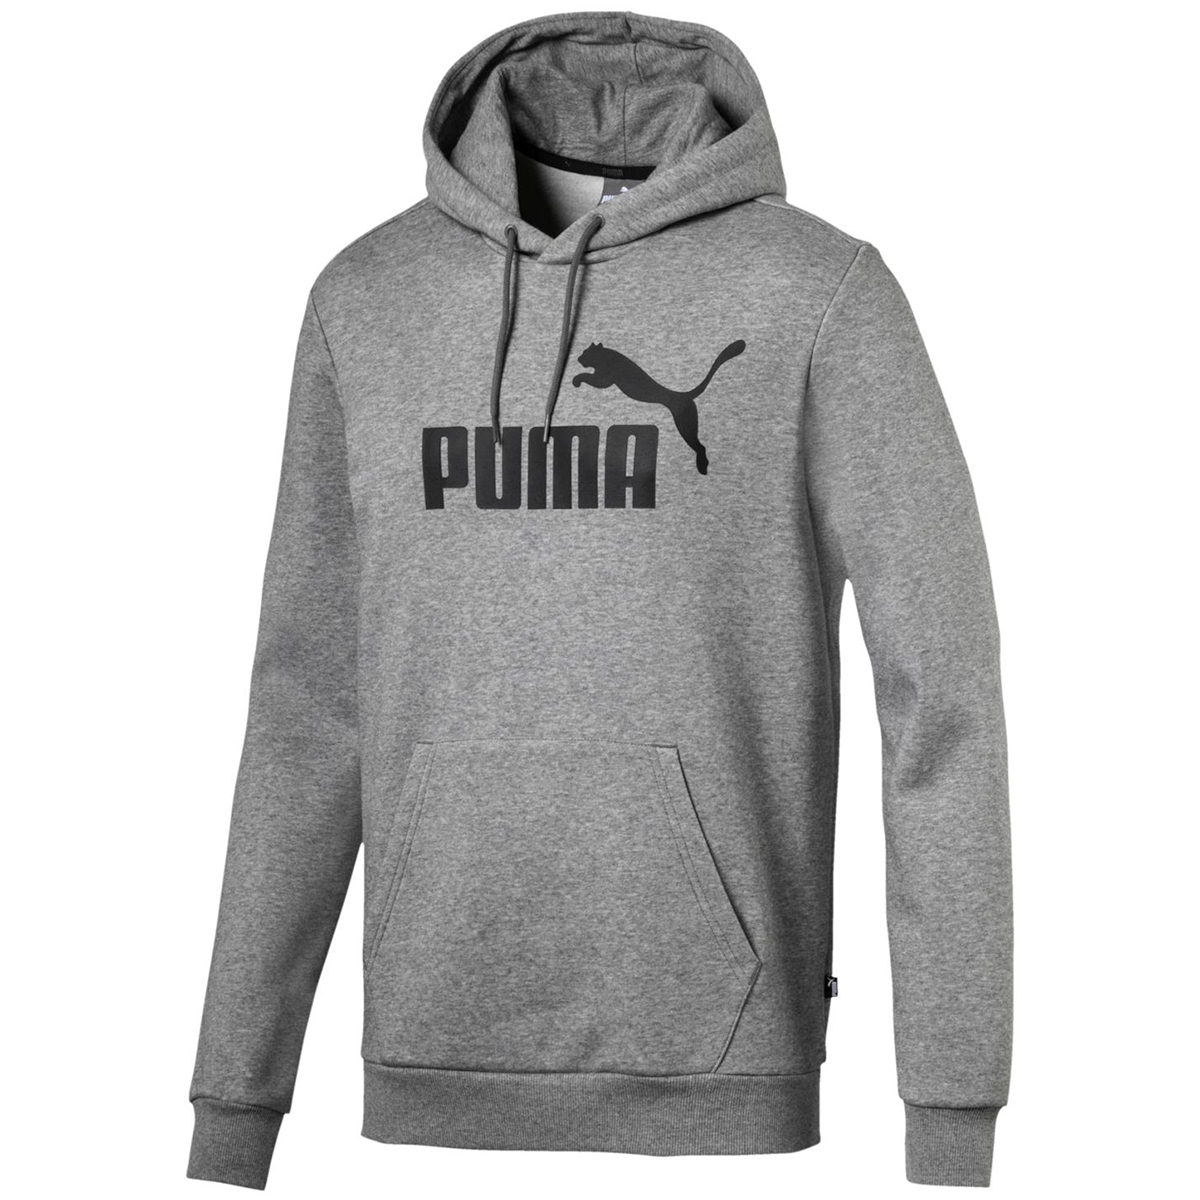 Puma Men's Essentials Fleece Pullover Hoodie - Black, XL